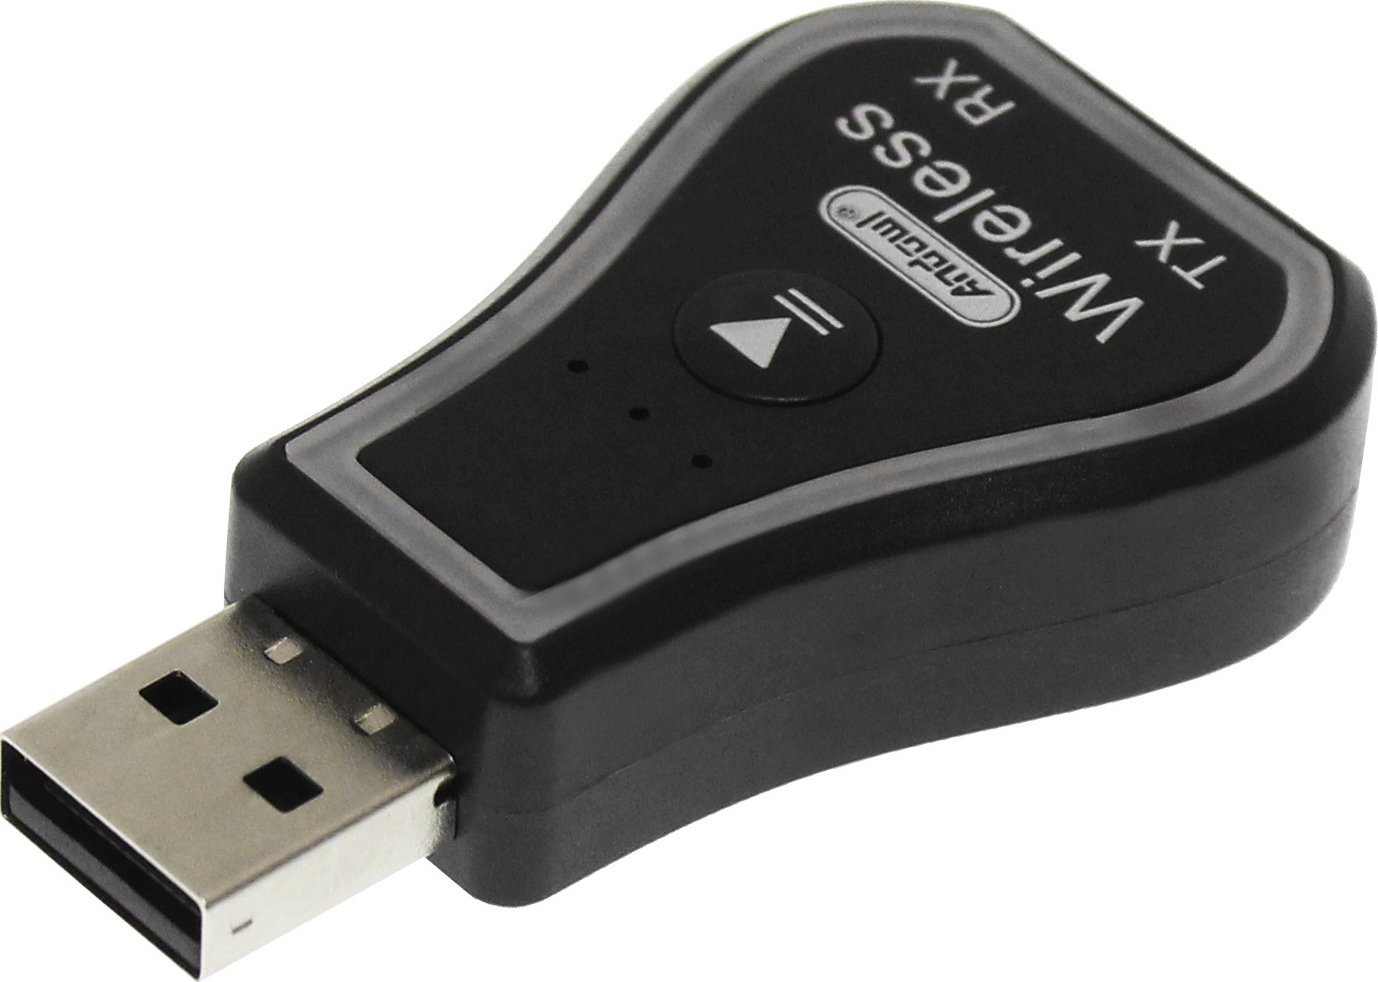 Andowl Q-TR31 Bluetooth 5.0 Receiver με θύρα εξόδου USB